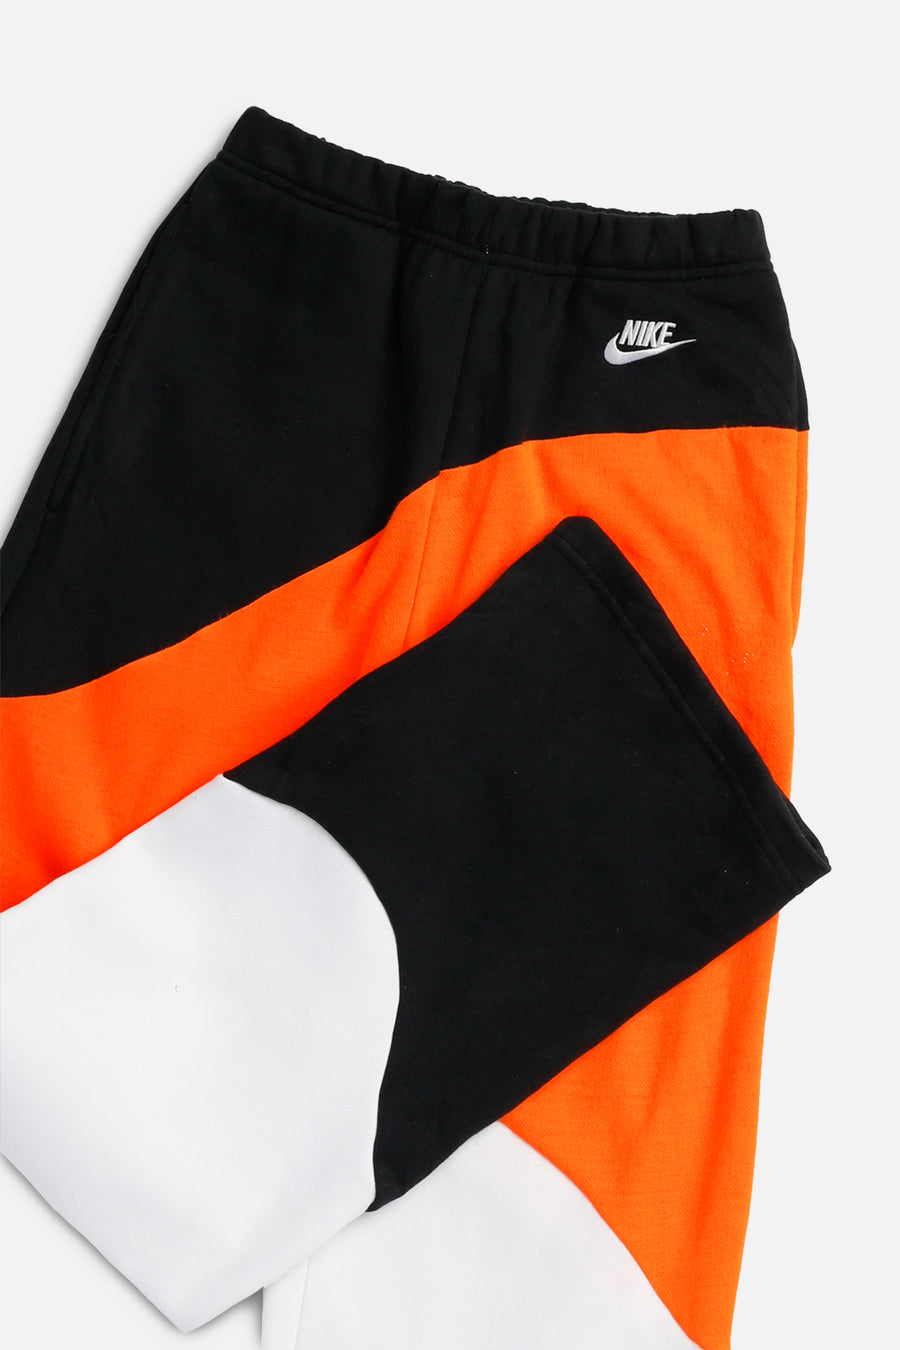 Rework Nike Wave Sweatpants - XS